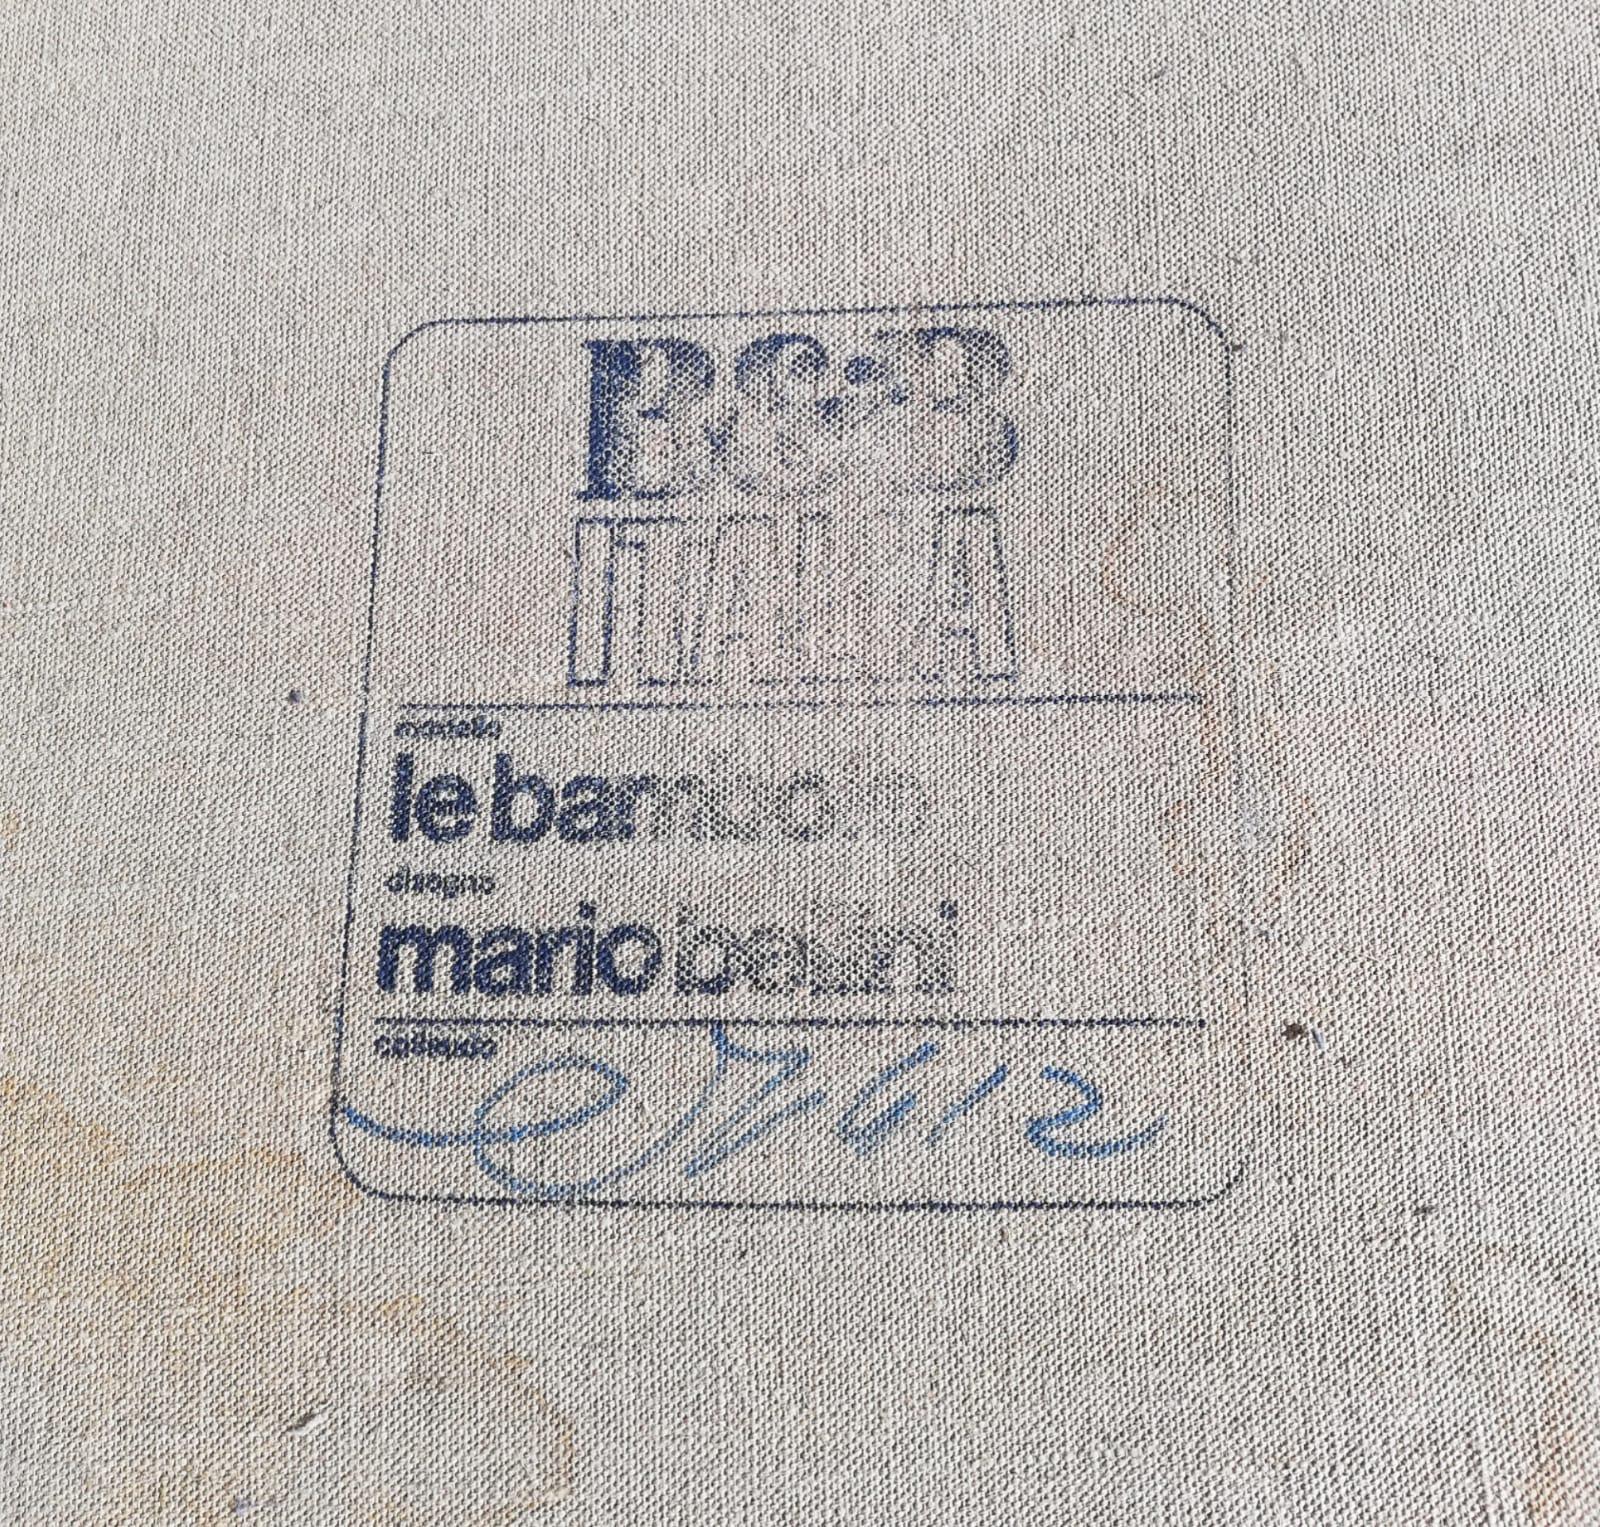 Fabric Le Bambole by Mario Bellini for B&B Italia 1972 For Sale